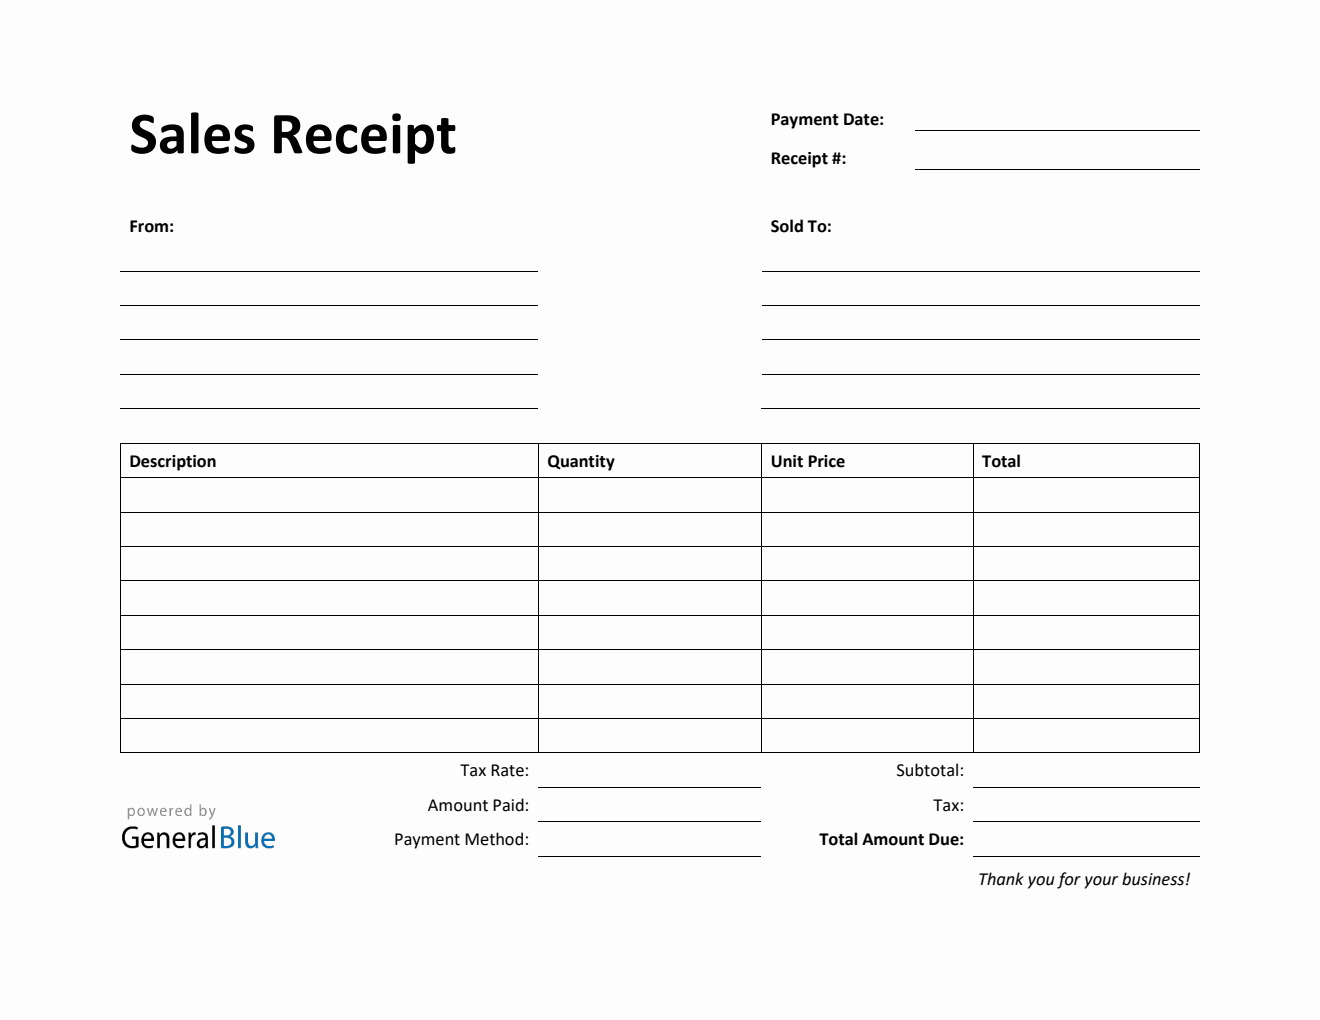 Sales Receipt Template in PDF (Printable)